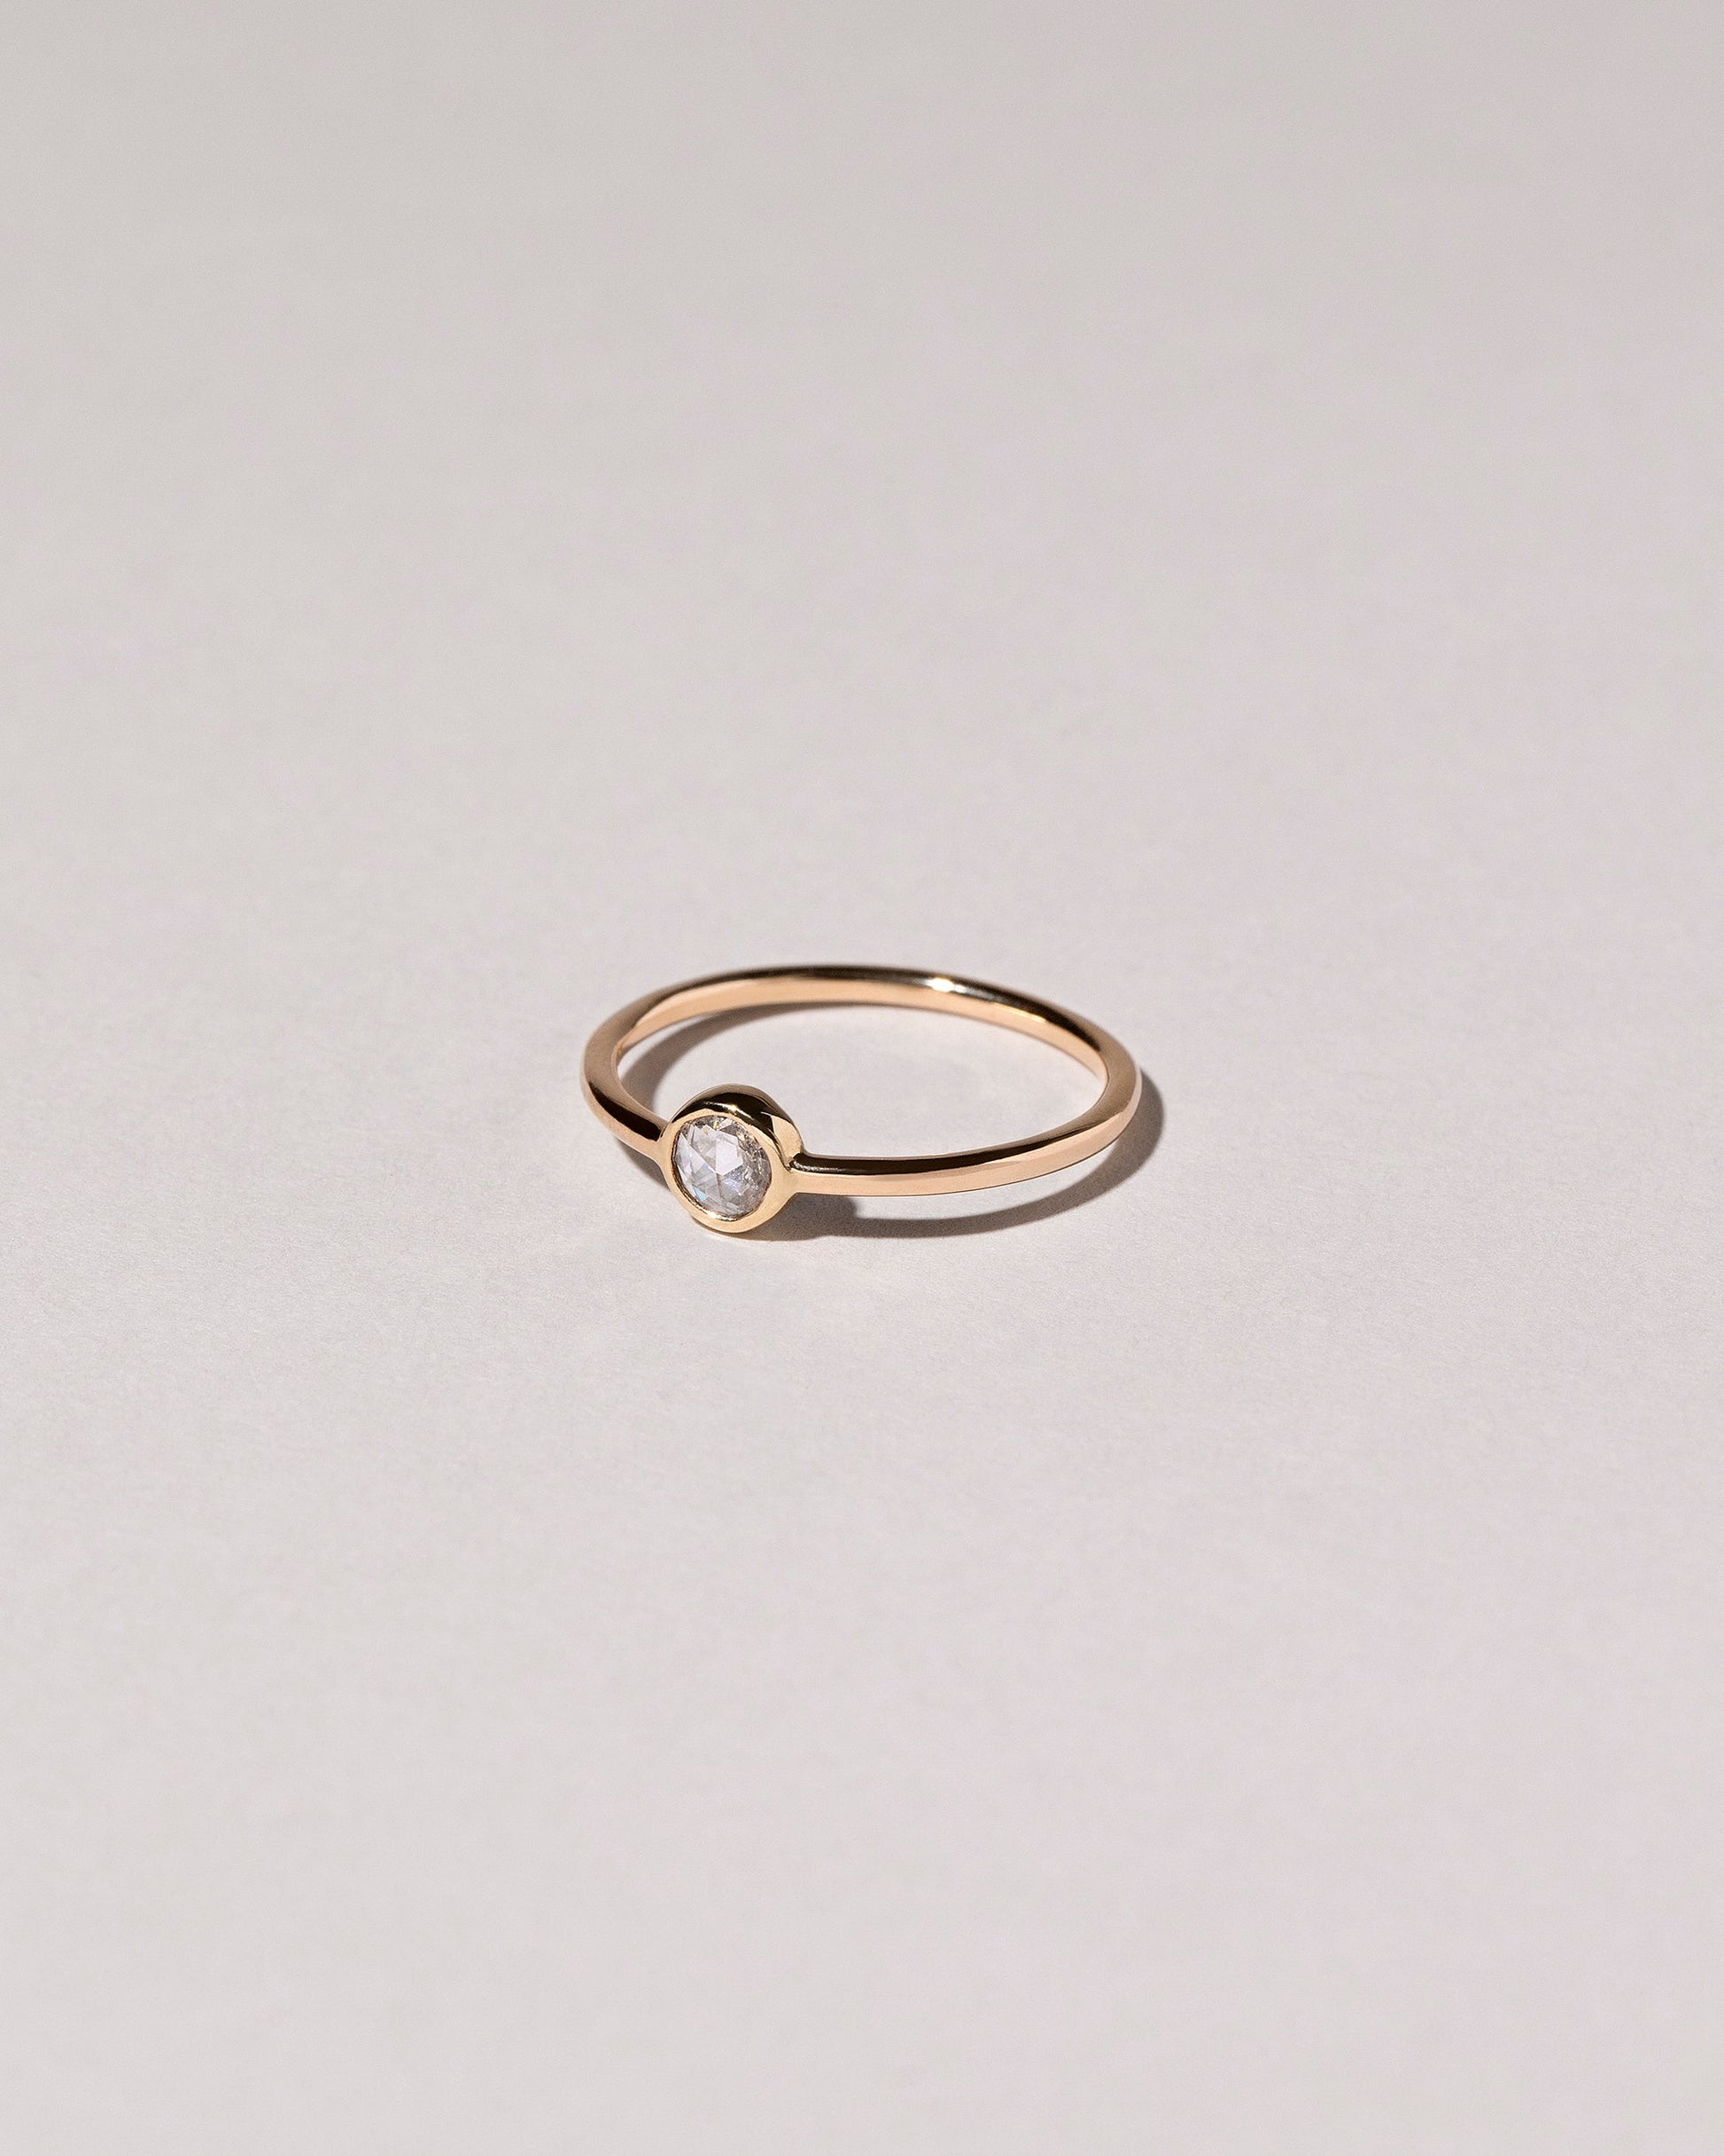  Rose Cut Purple Diamond Ring on light color background.